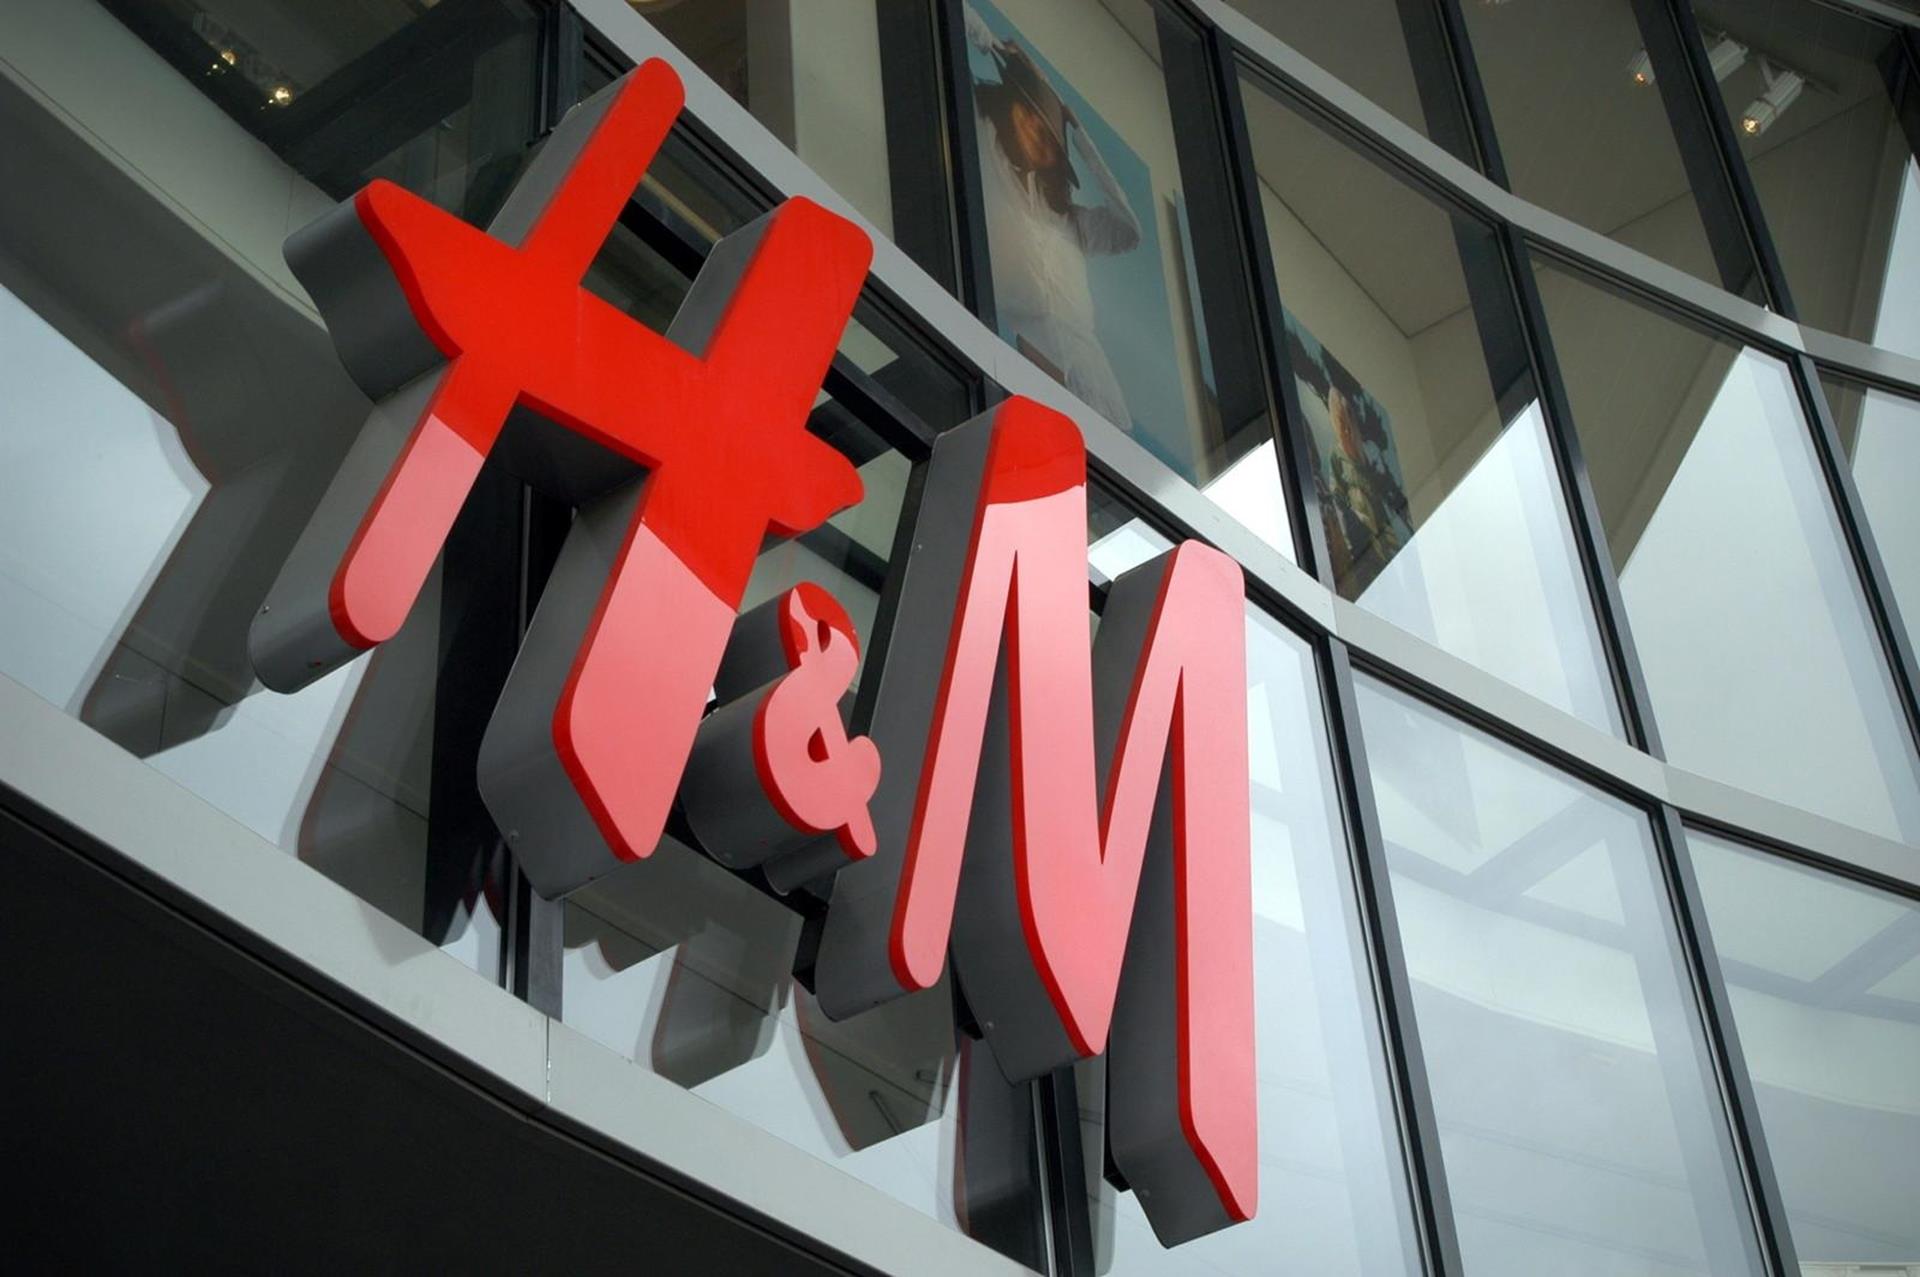 Https m com h. Бренд h m. Логотип магазина одежды h&m. Вывеска магазина h&m. H M вывеска.